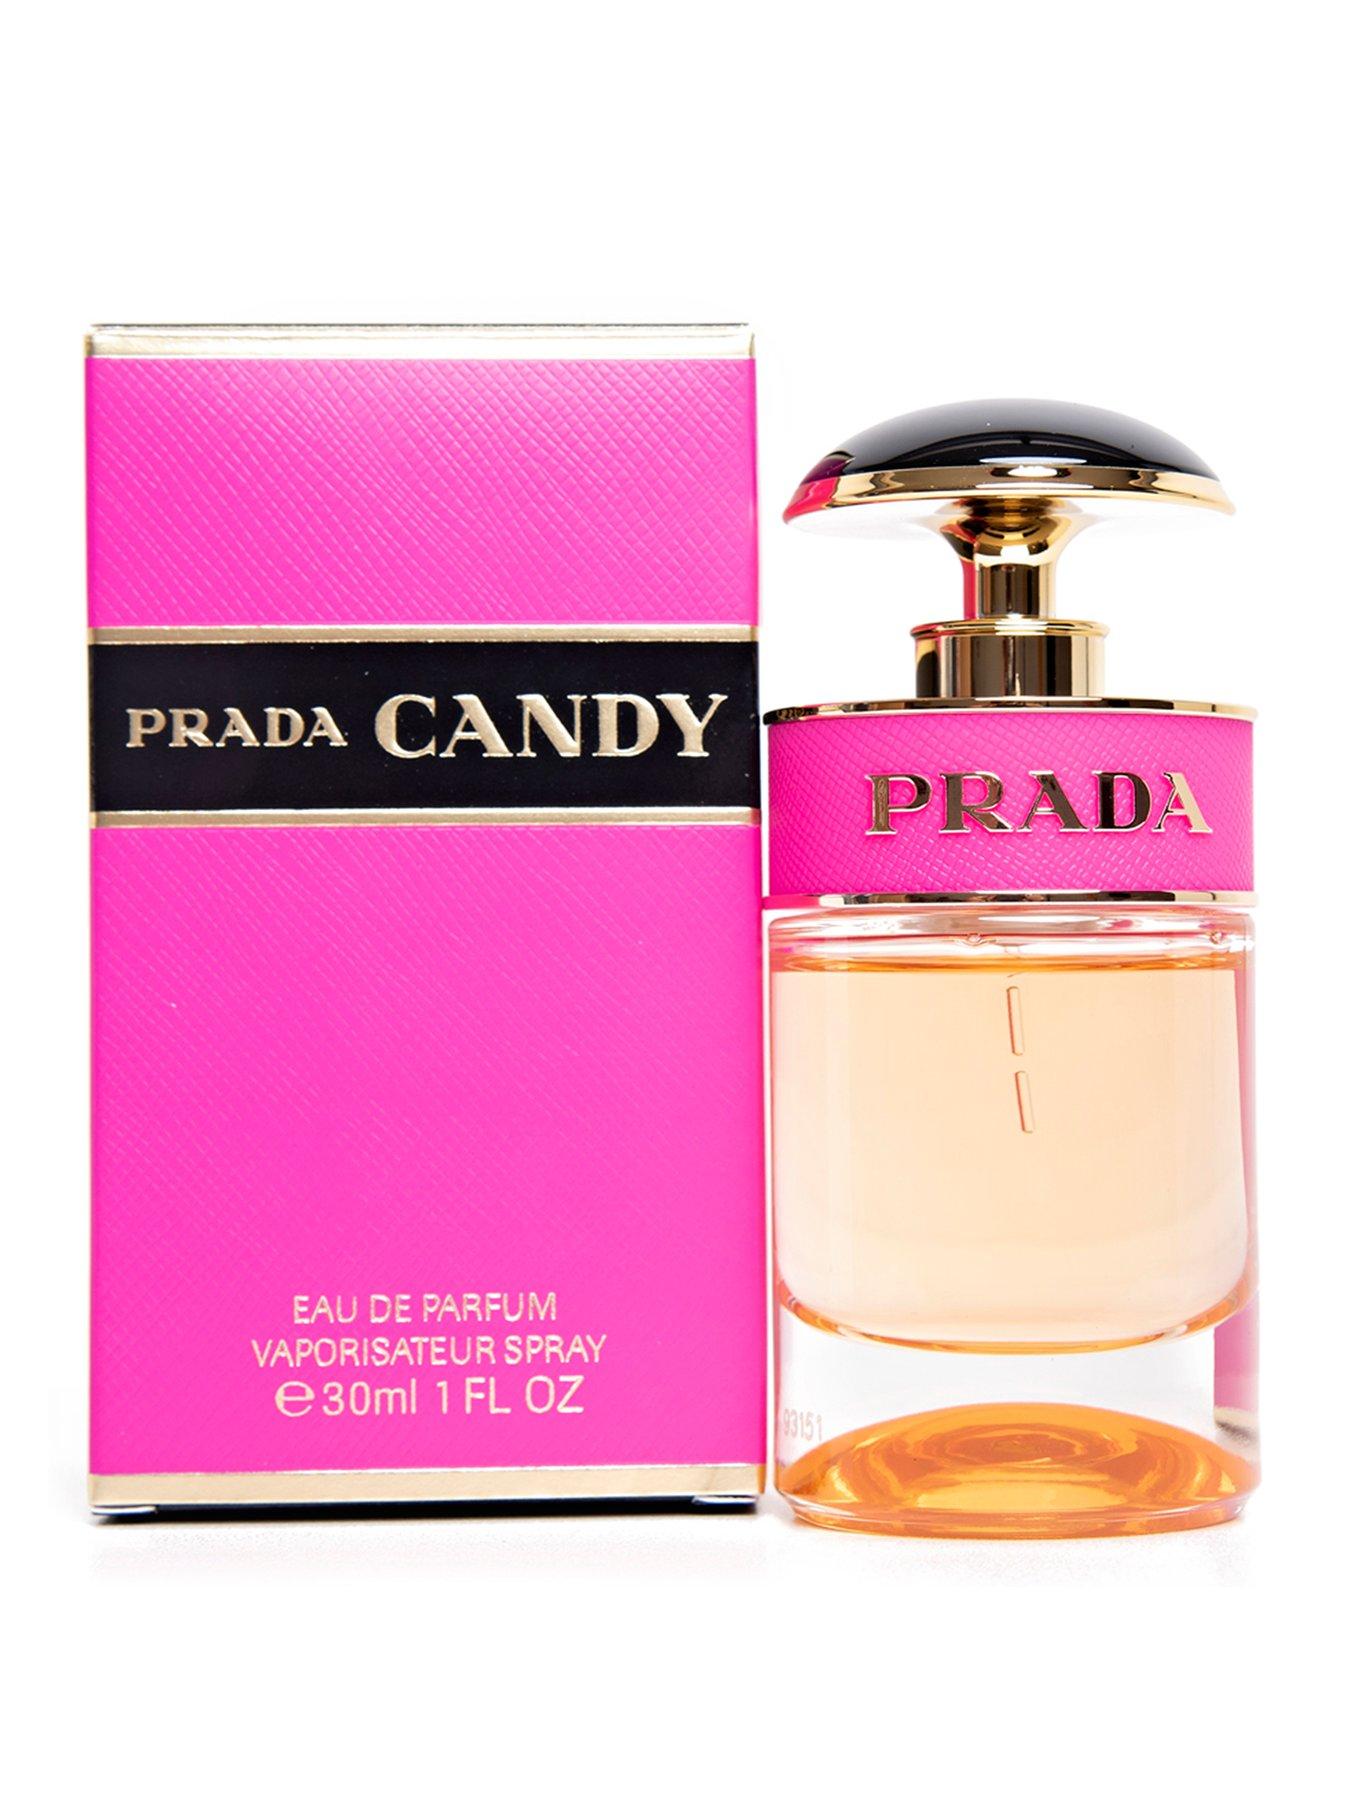 prada candy 30ml price